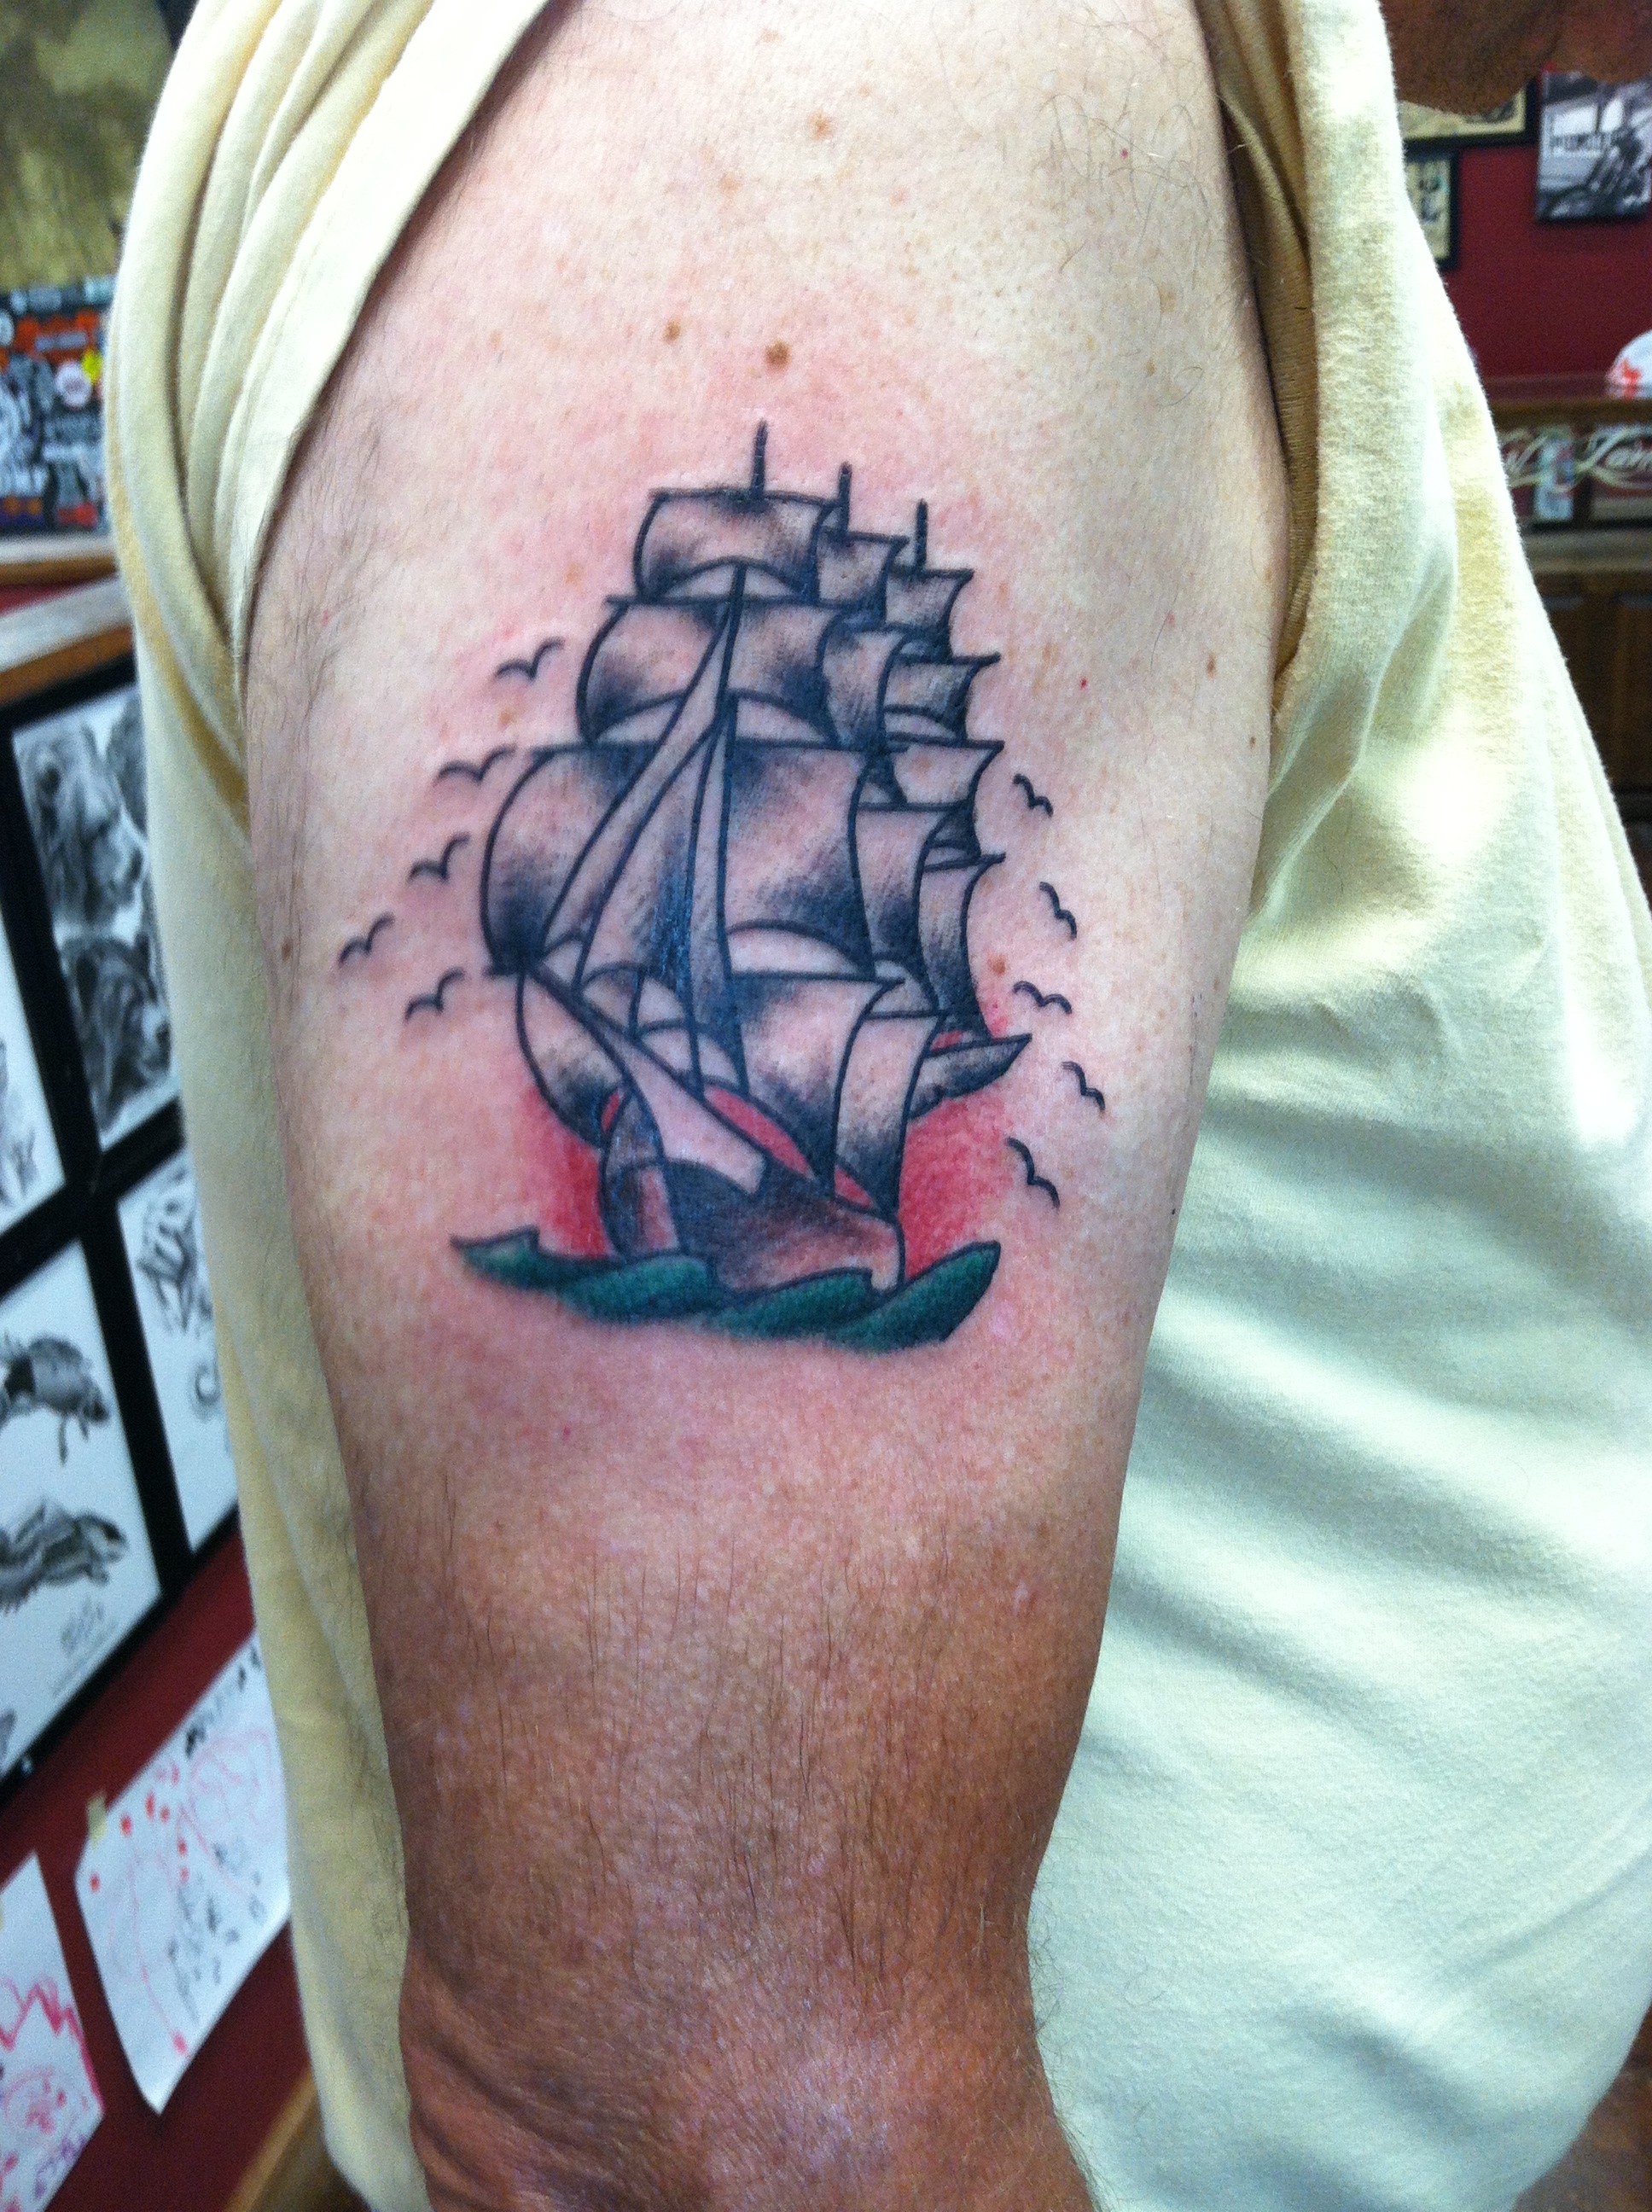 american traditional ship tattoo